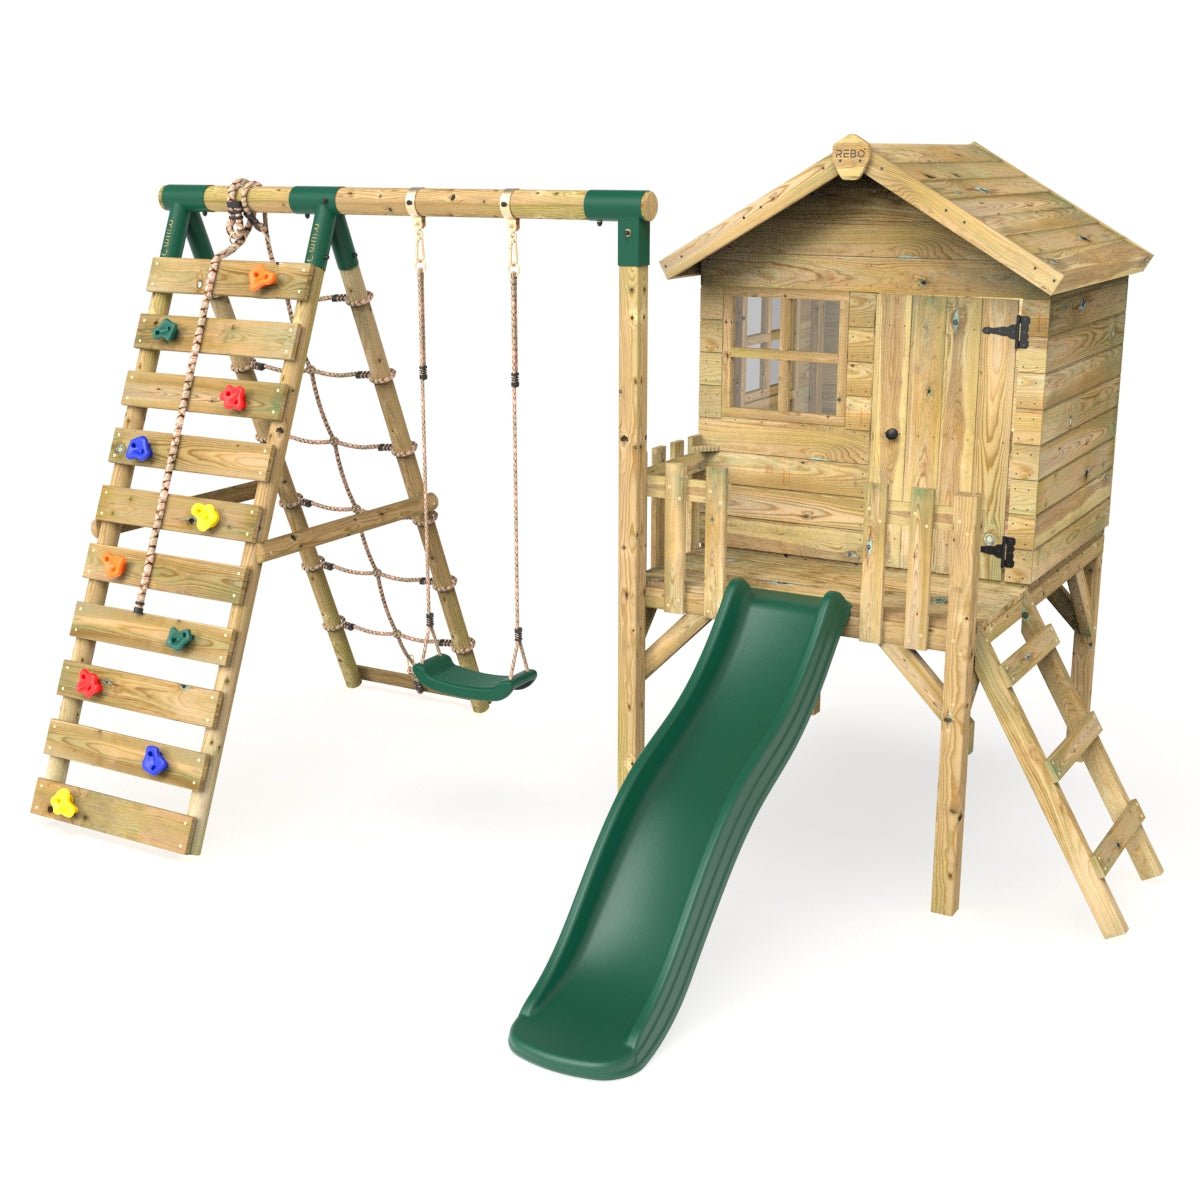 Rebo Orchard 4FT Wooden Playhouse + Swings, Rock Wall, Deck & 6FT Slide – Solar Green